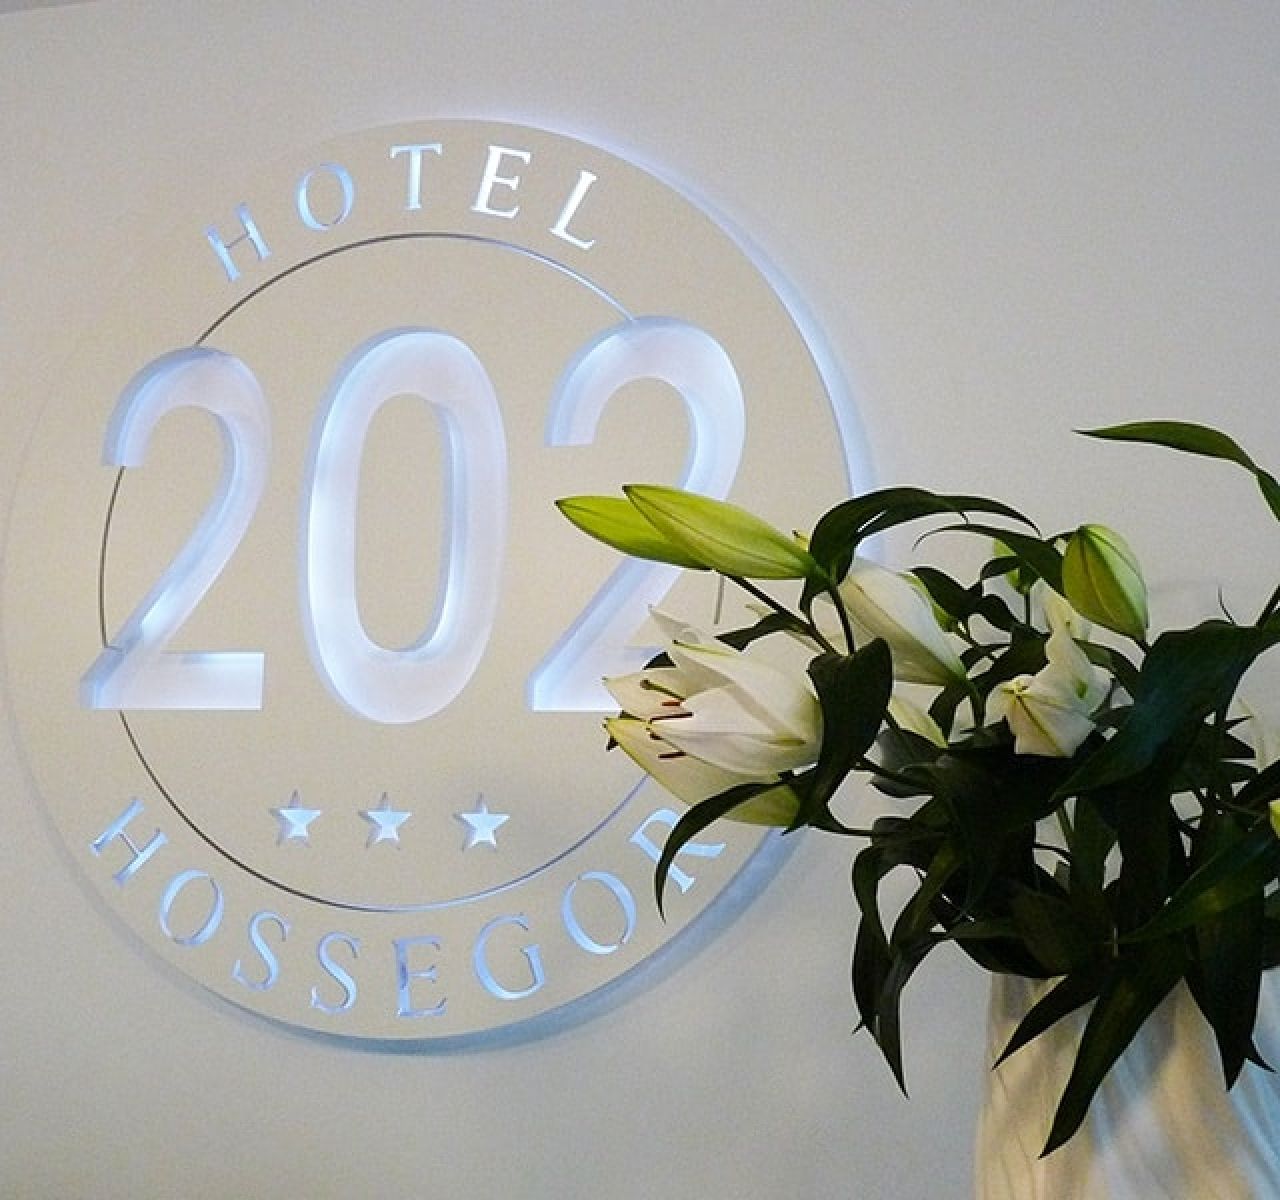 Réception Hotel 202